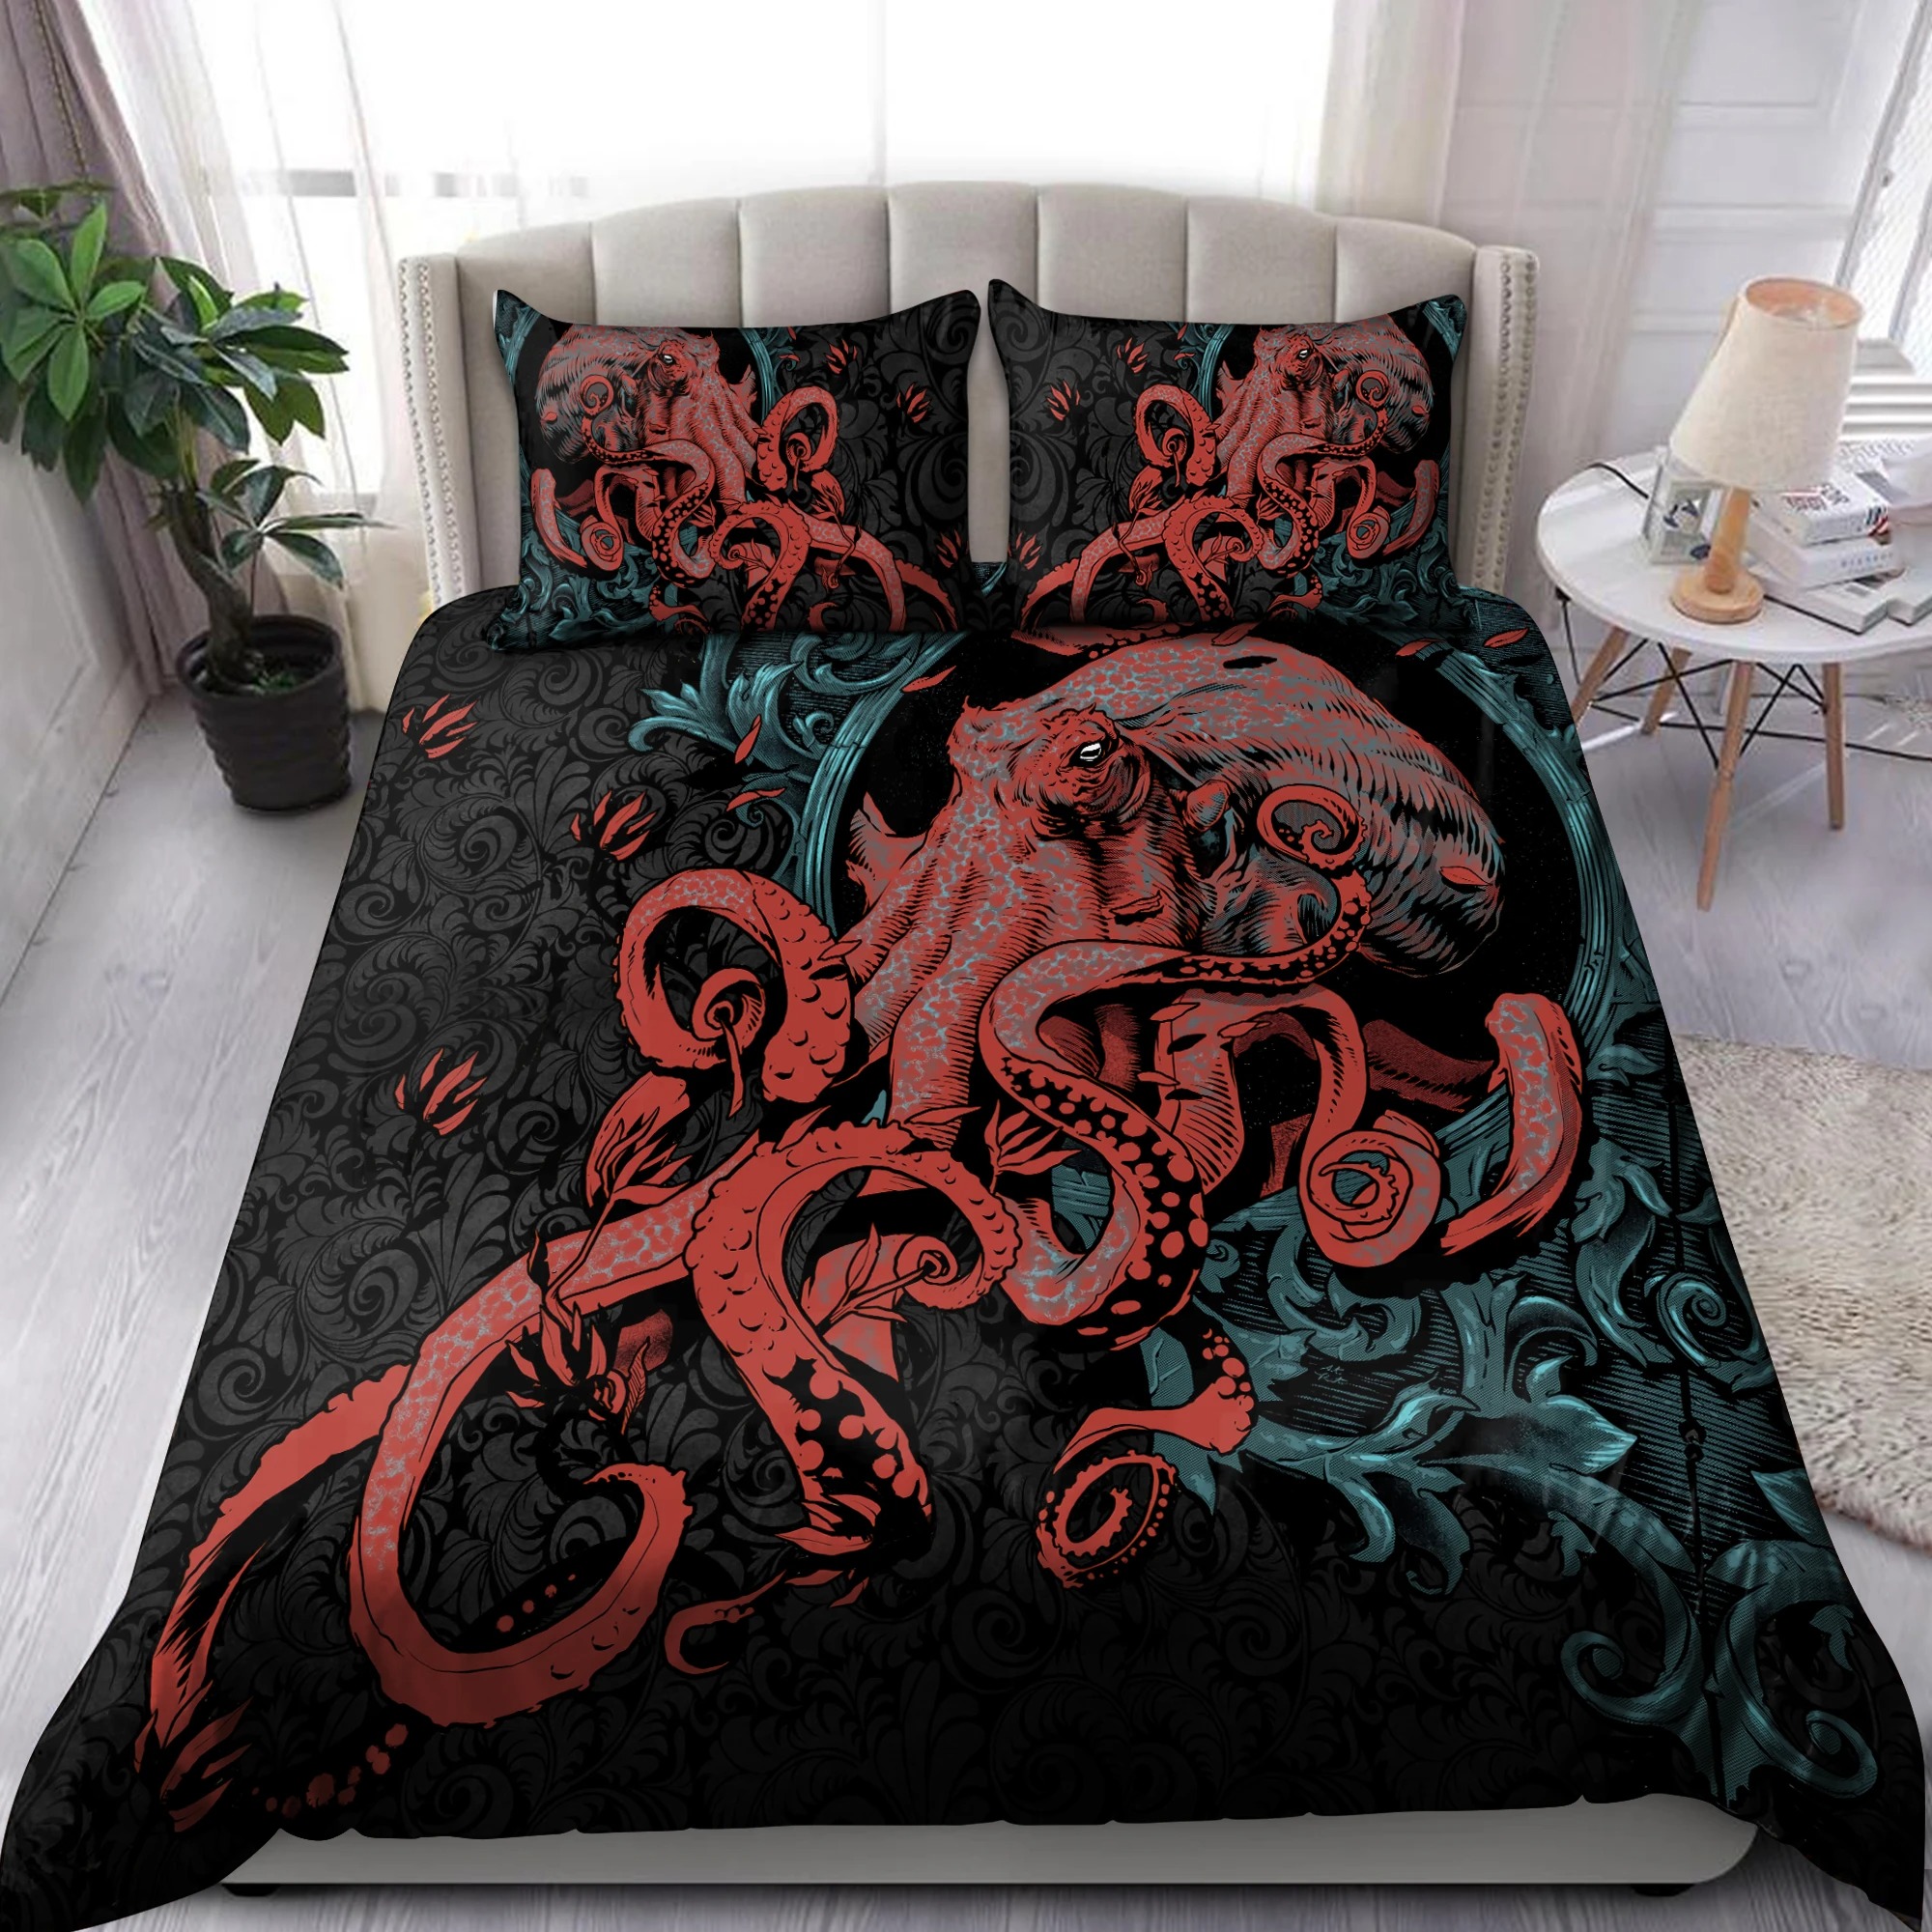 Octopus Gothic bedding set 4